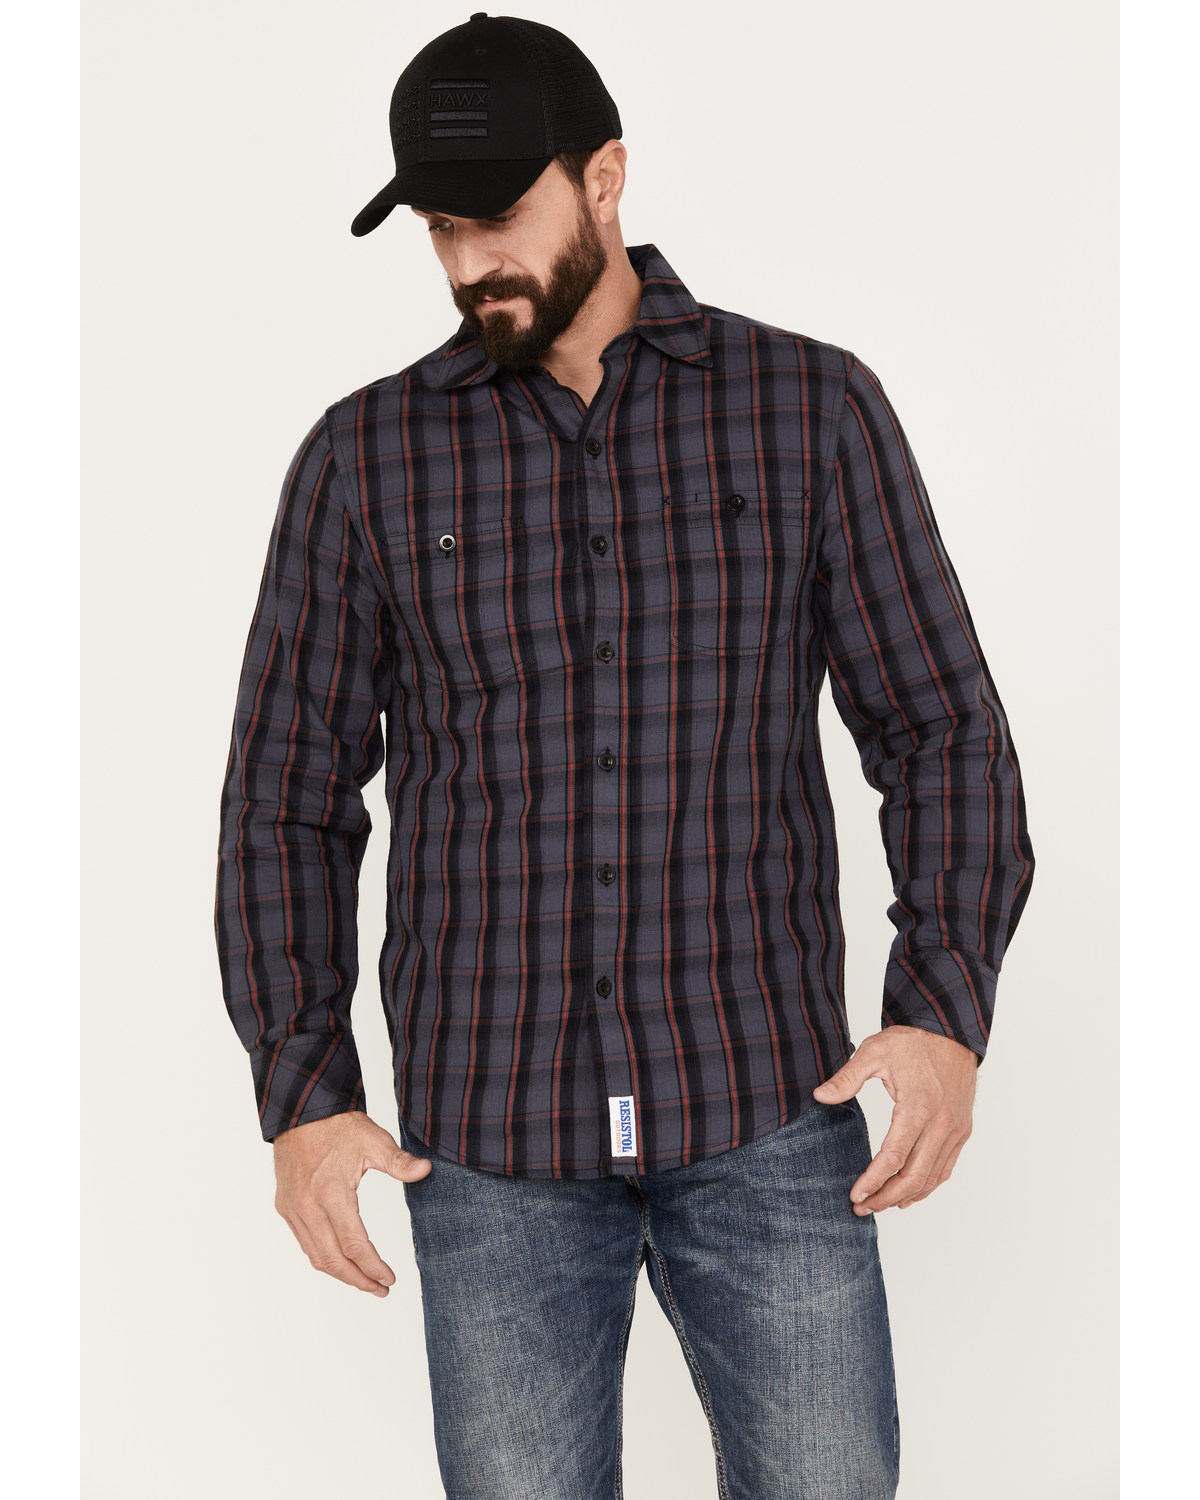 Resistol Men's Telluride Plaid Print Long Sleeve Button Down Western Shirt